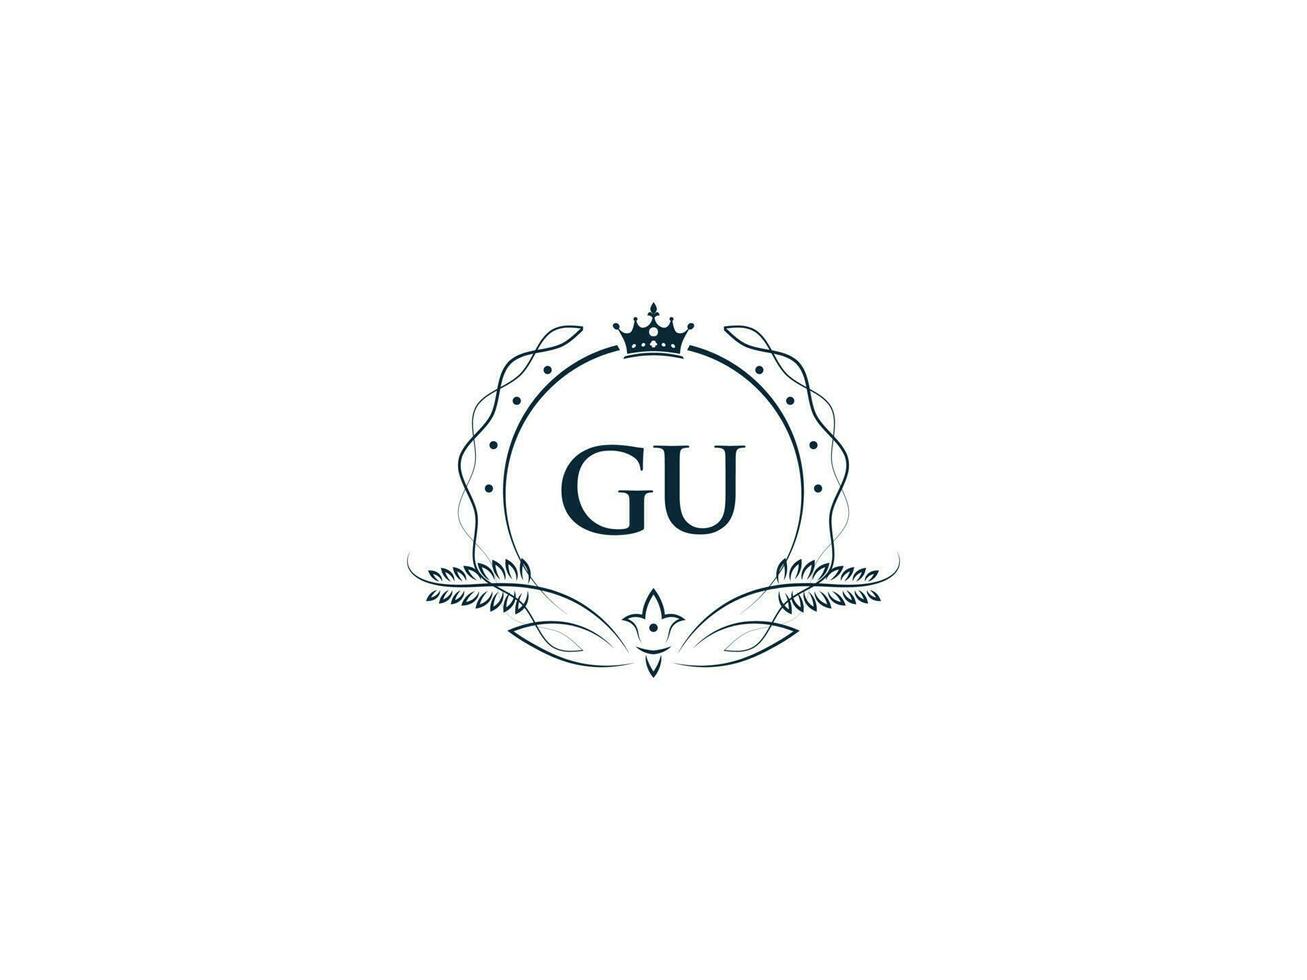 mínimo letra Gu logo corona icono, prima lujo Gu ug femenino letra logo icono vector